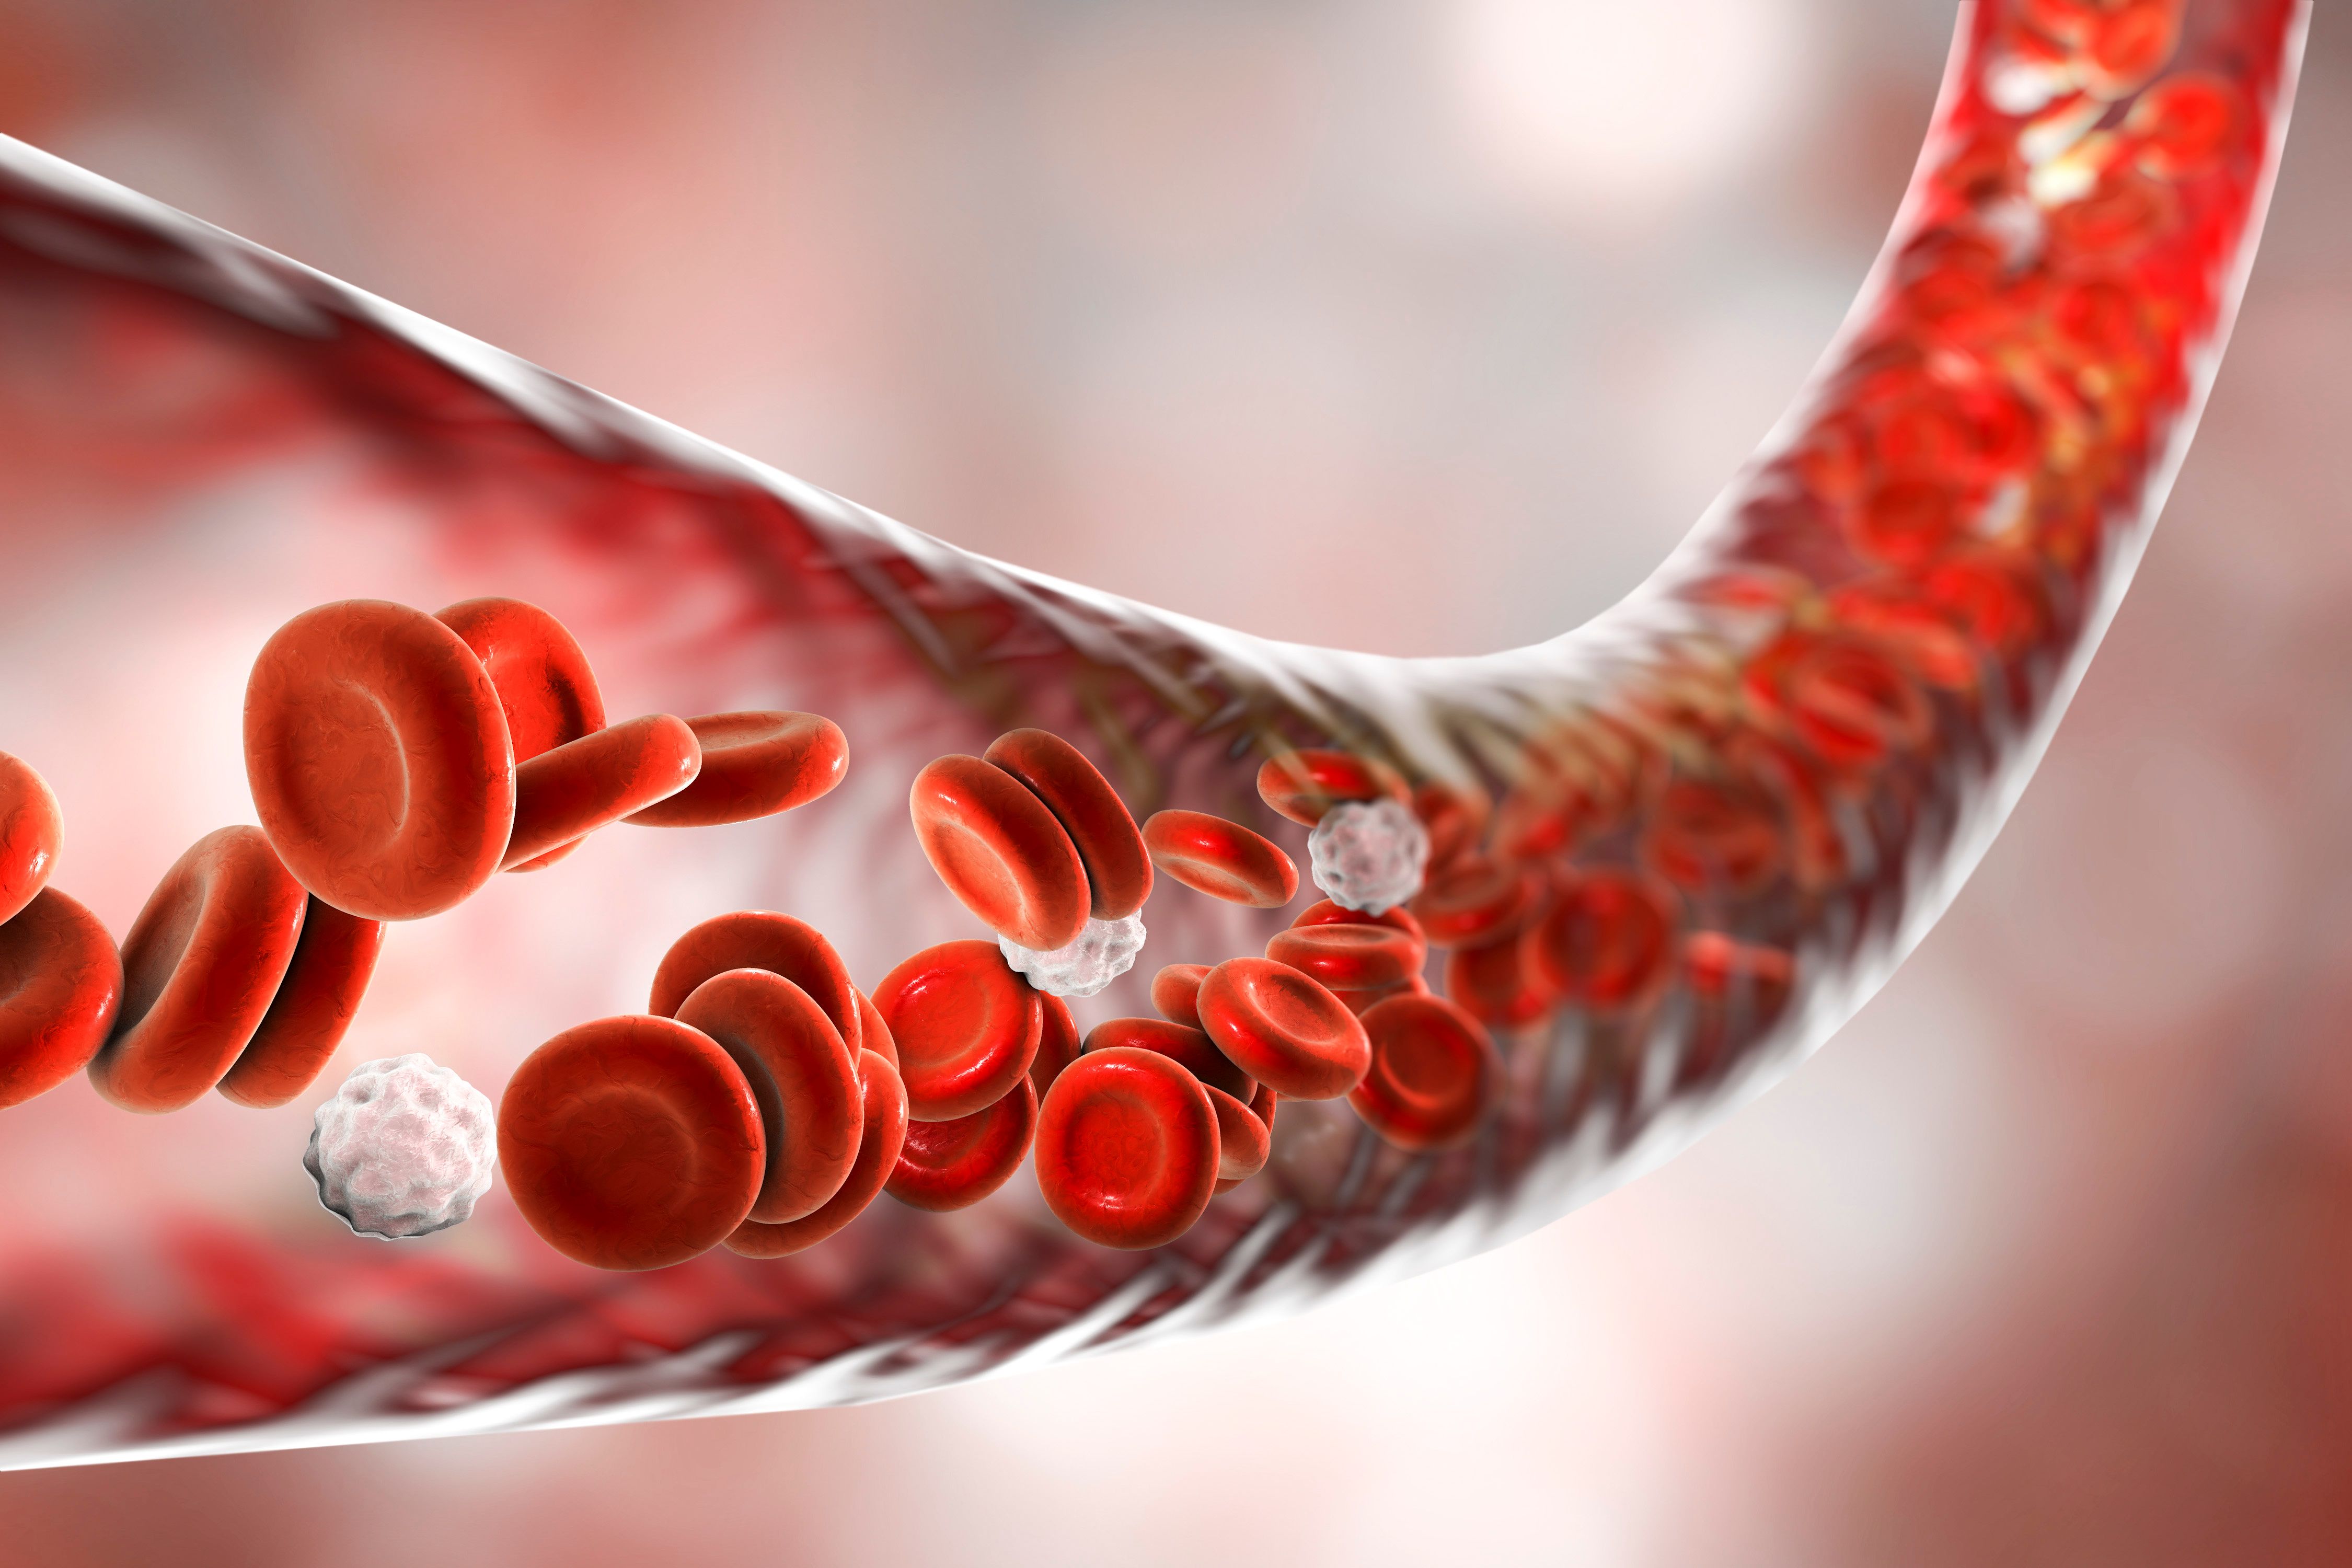 Blood vessel | Image credit: Dr_Microbe – stock.adobe.com